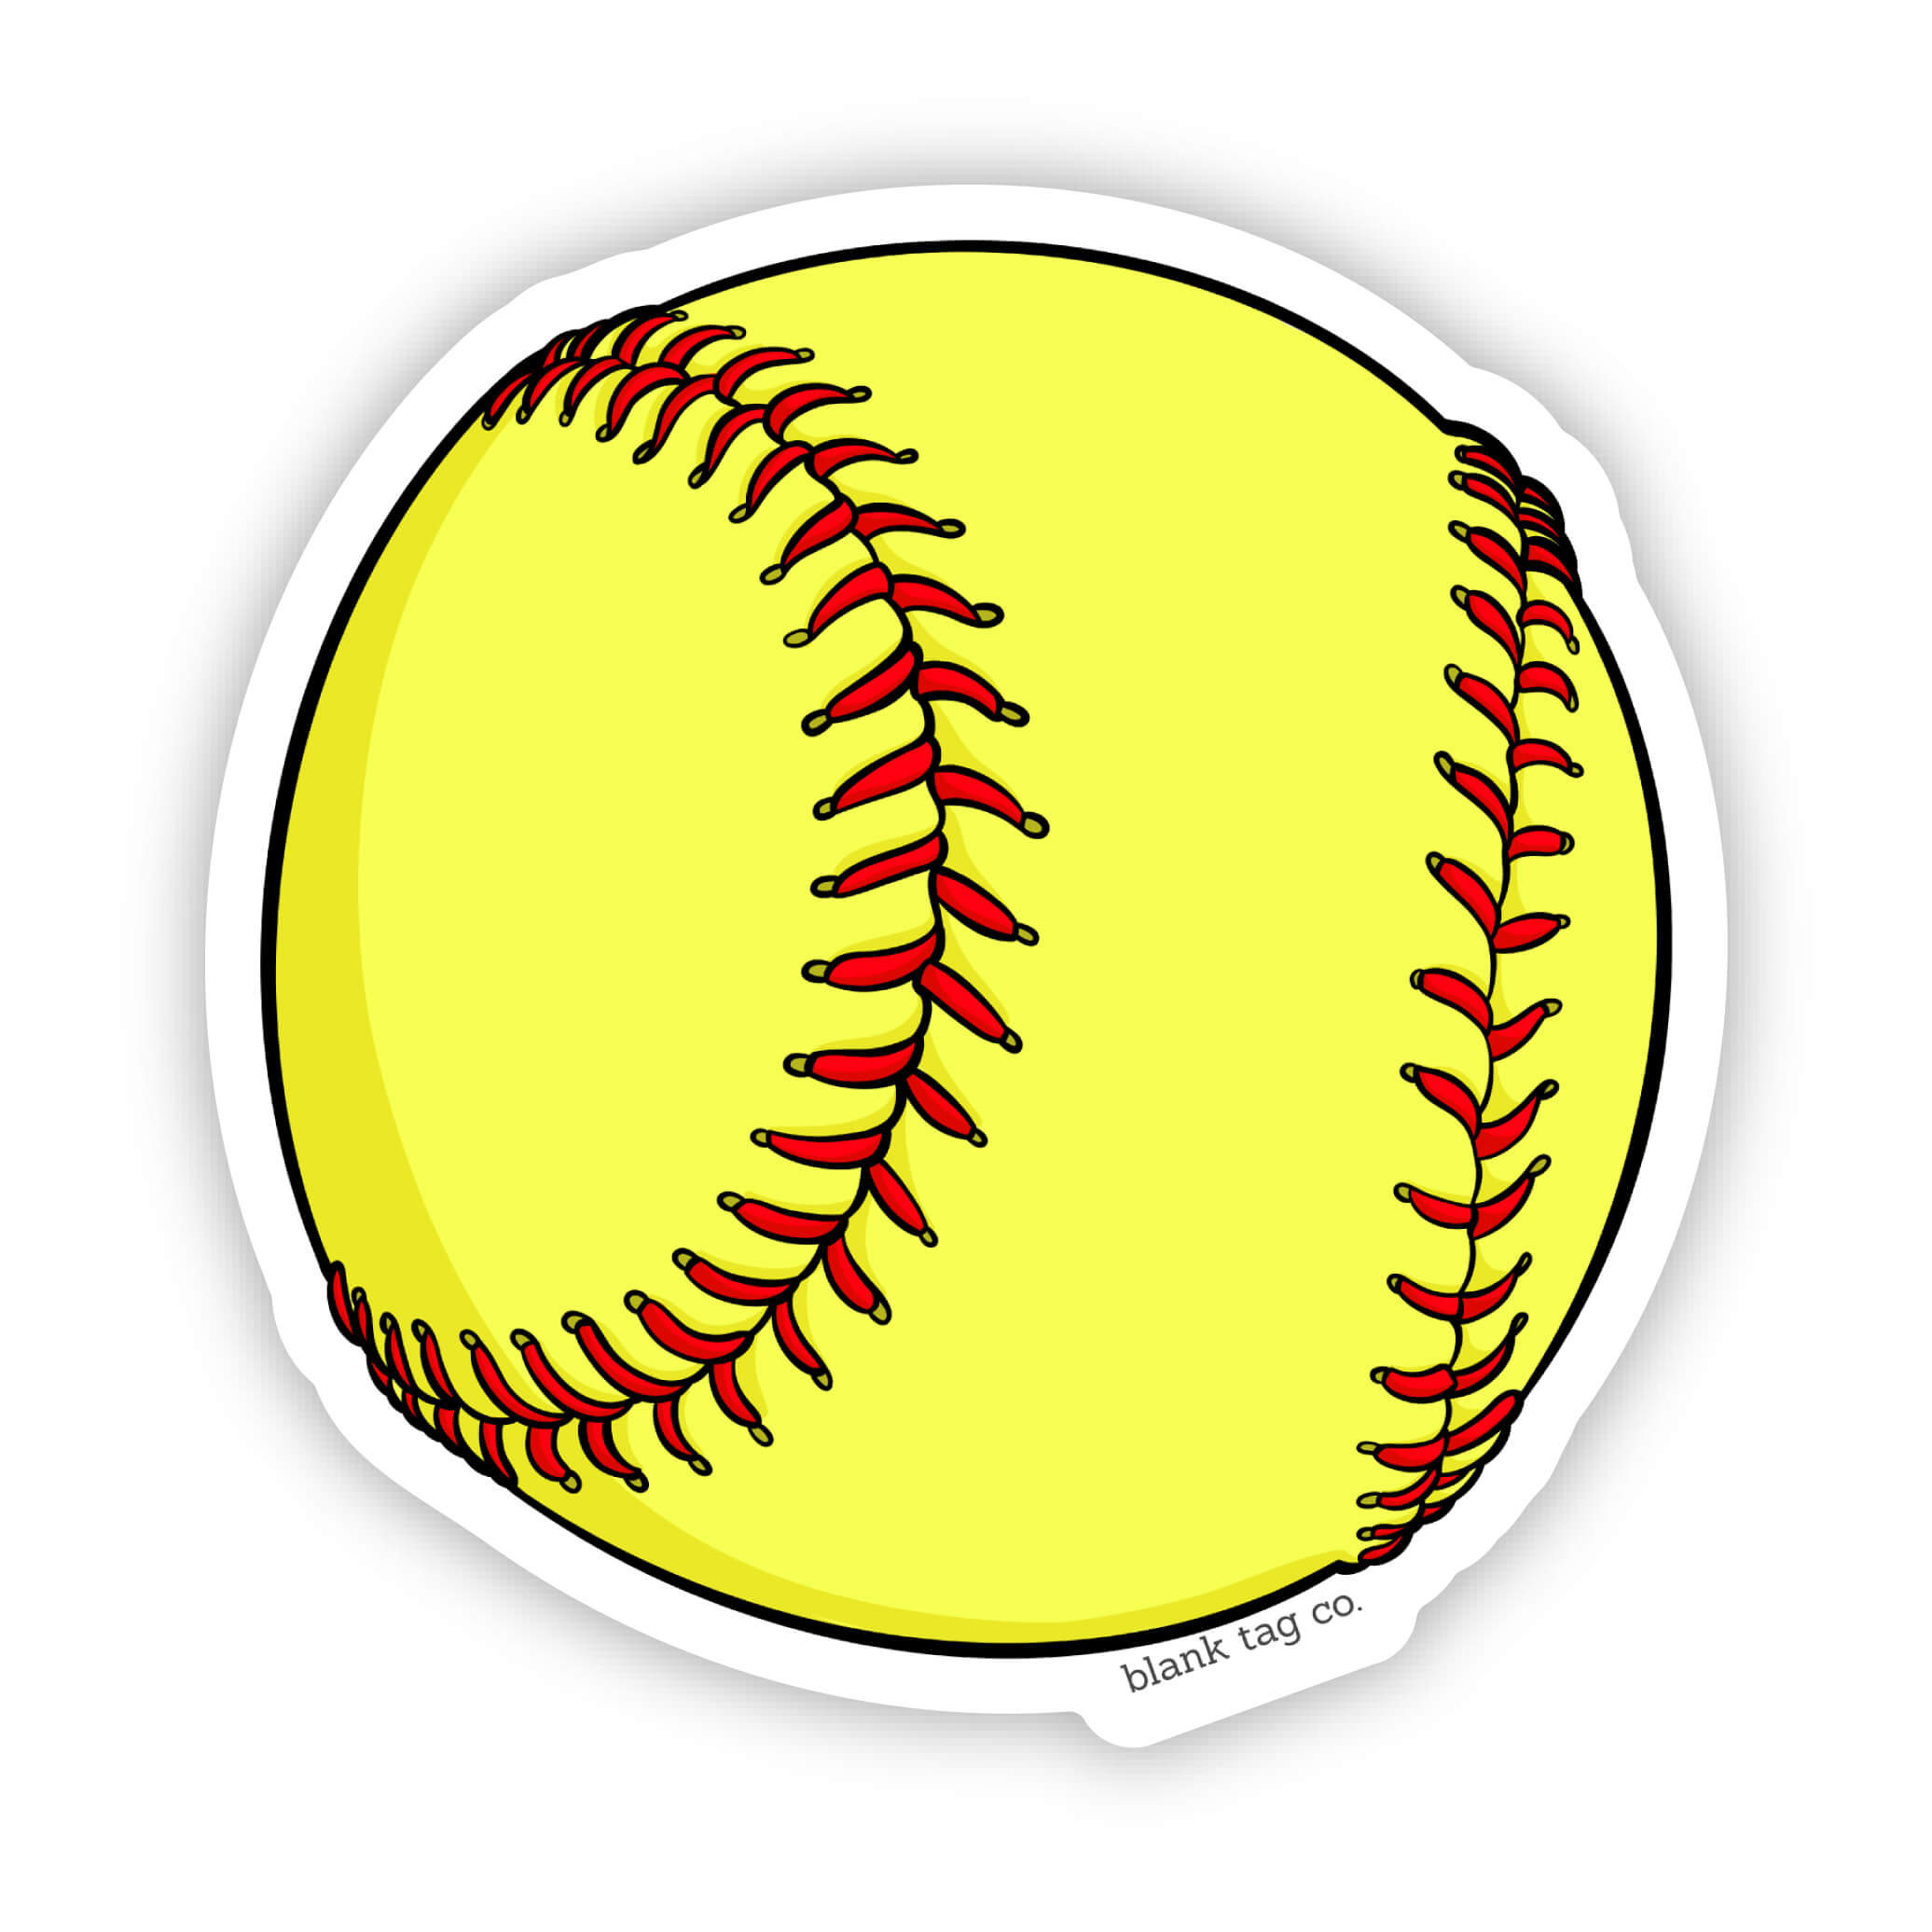 The Softball Sticker